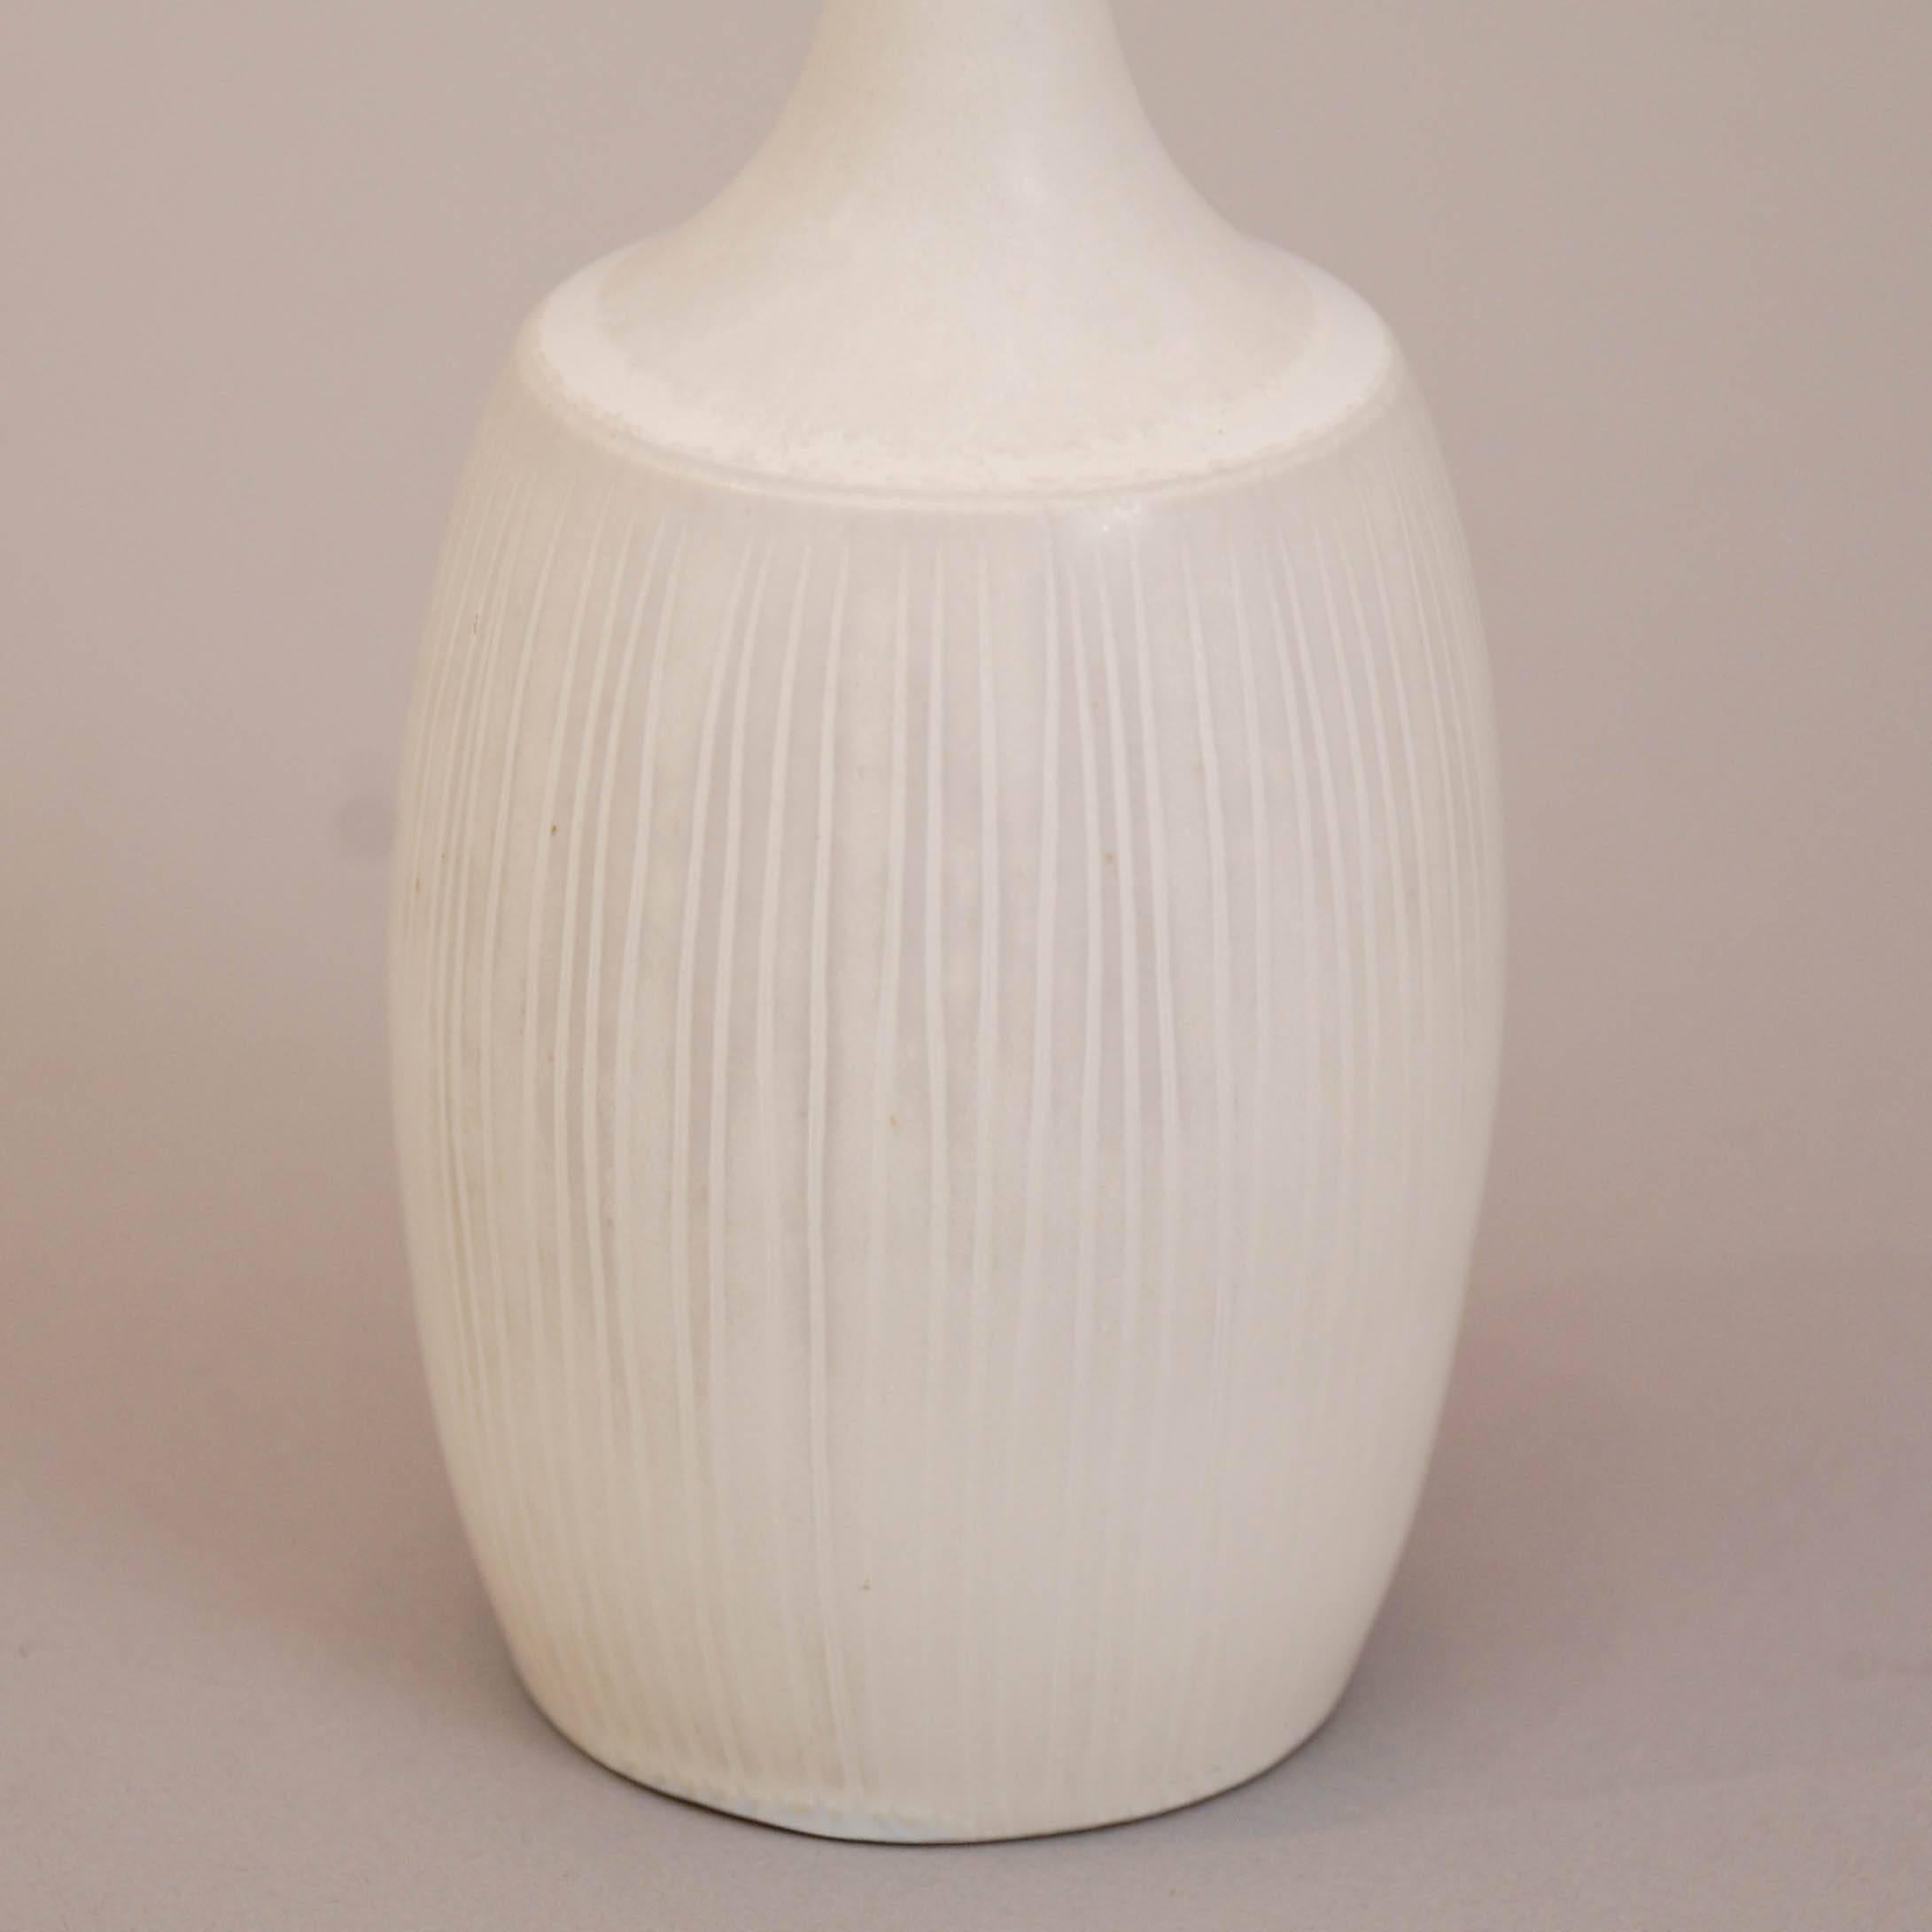 A handmade unique stoneware vase by Stig Lindberg for Gustavsberg, Sweden 1950s.